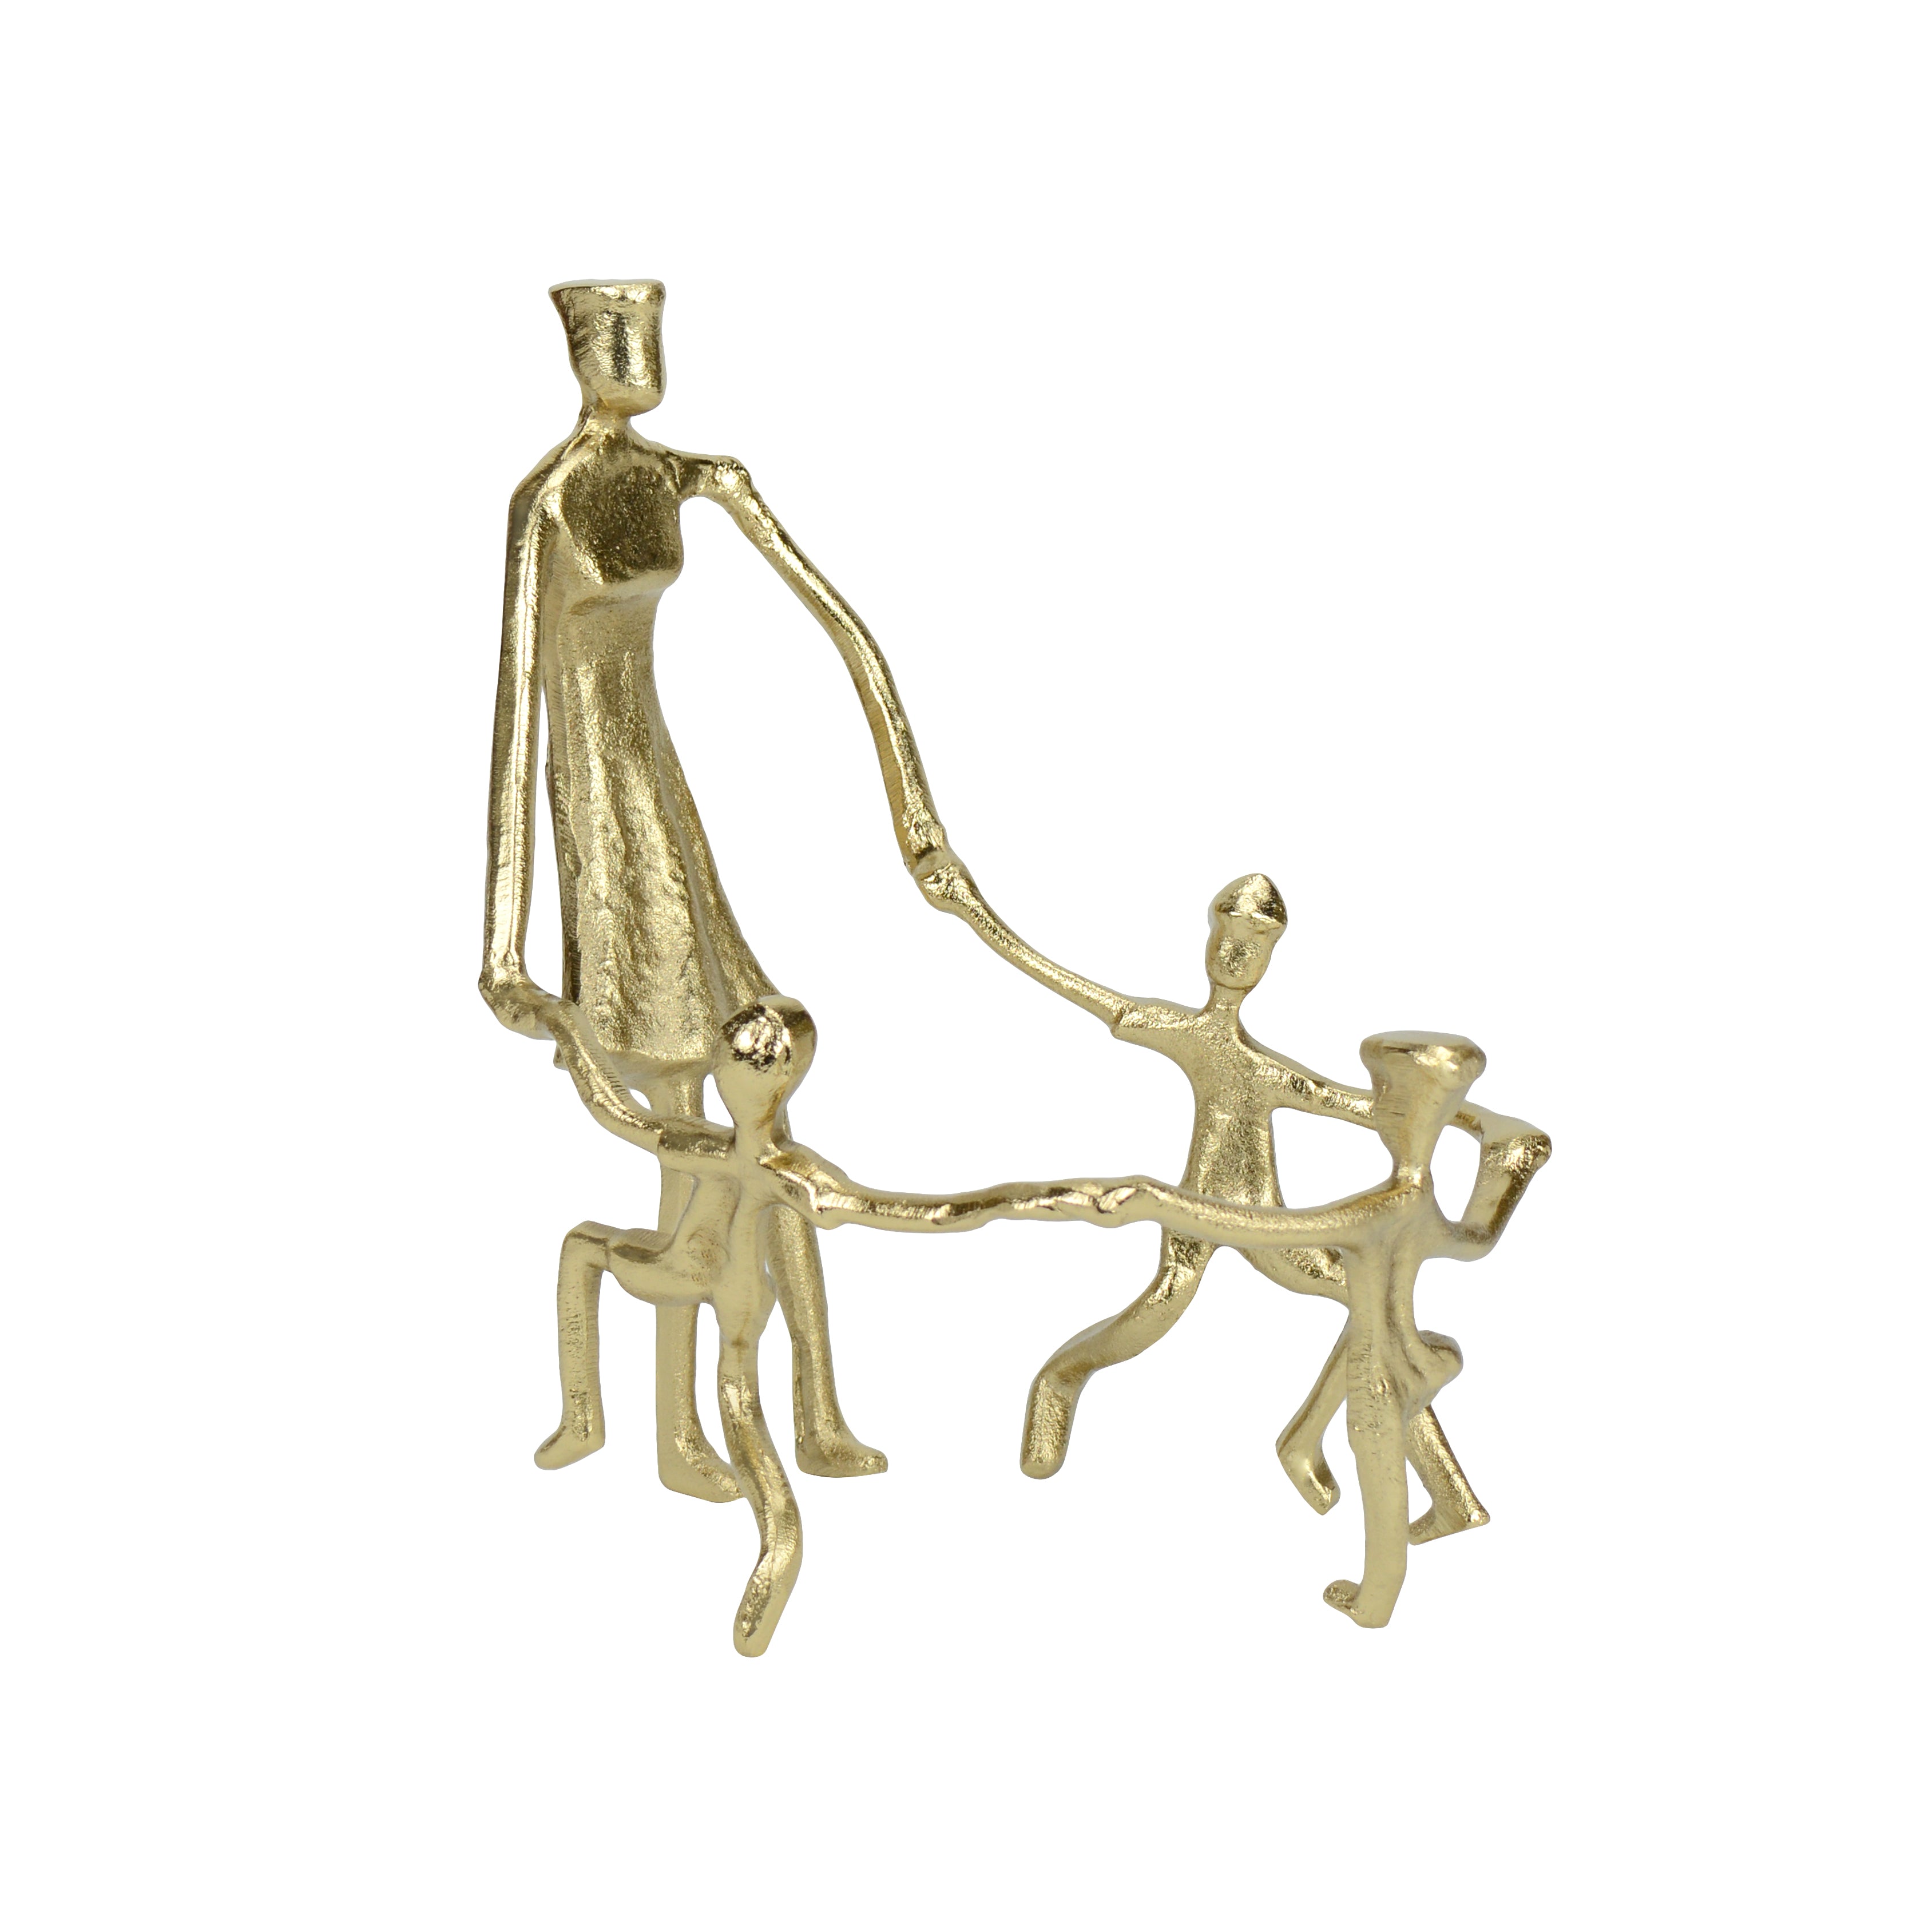 Togetherness Mother and Kids Gold Sculpture